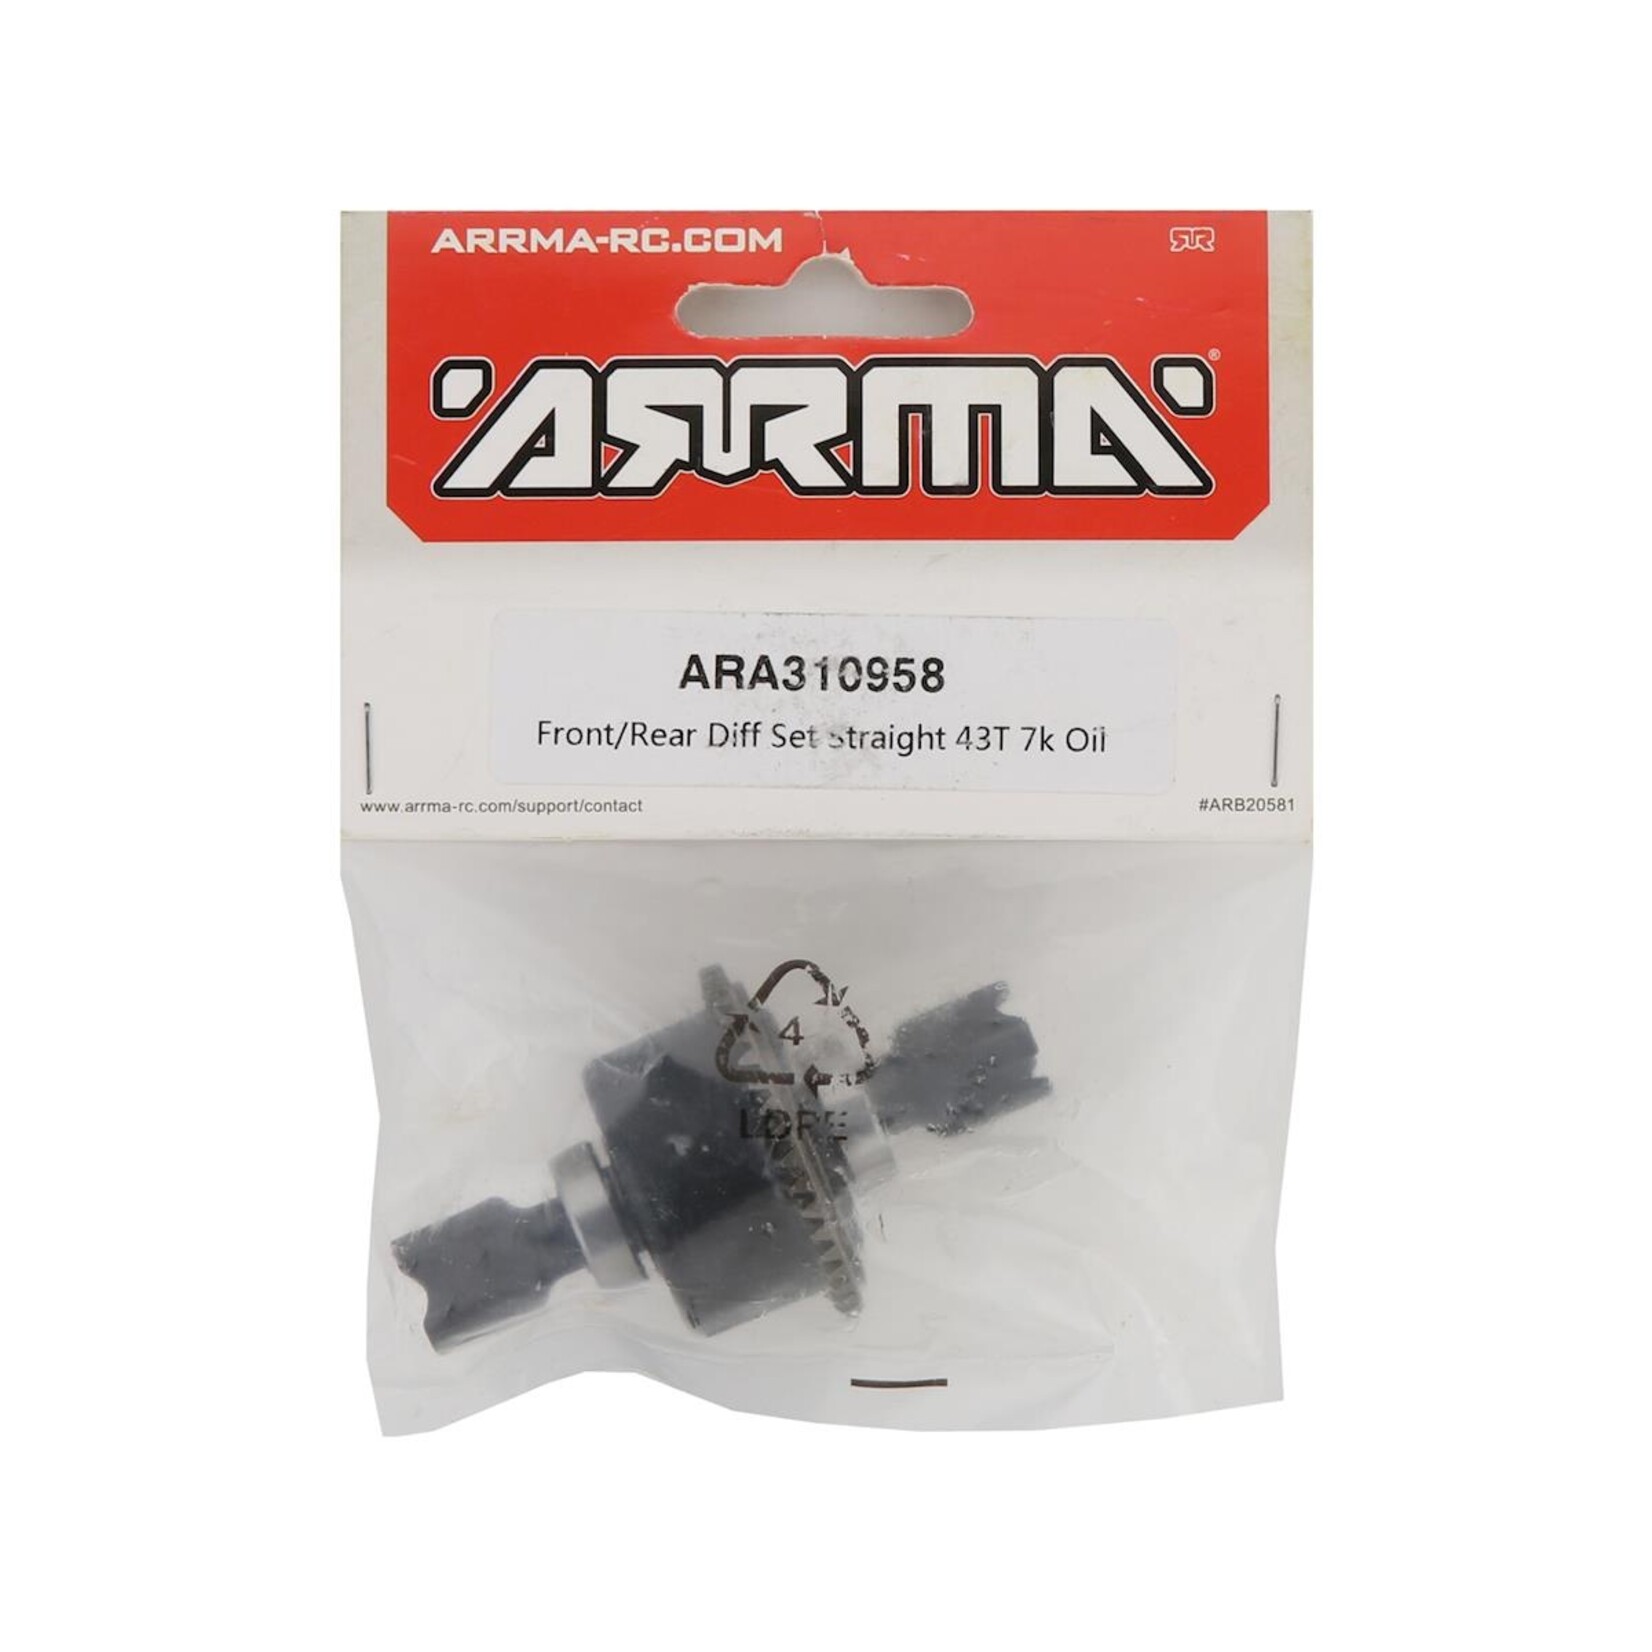 ARRMA Arrma Limitless/Infraction Front/Rear Differential w/Straight Cut Gear (43T) #ARA310958